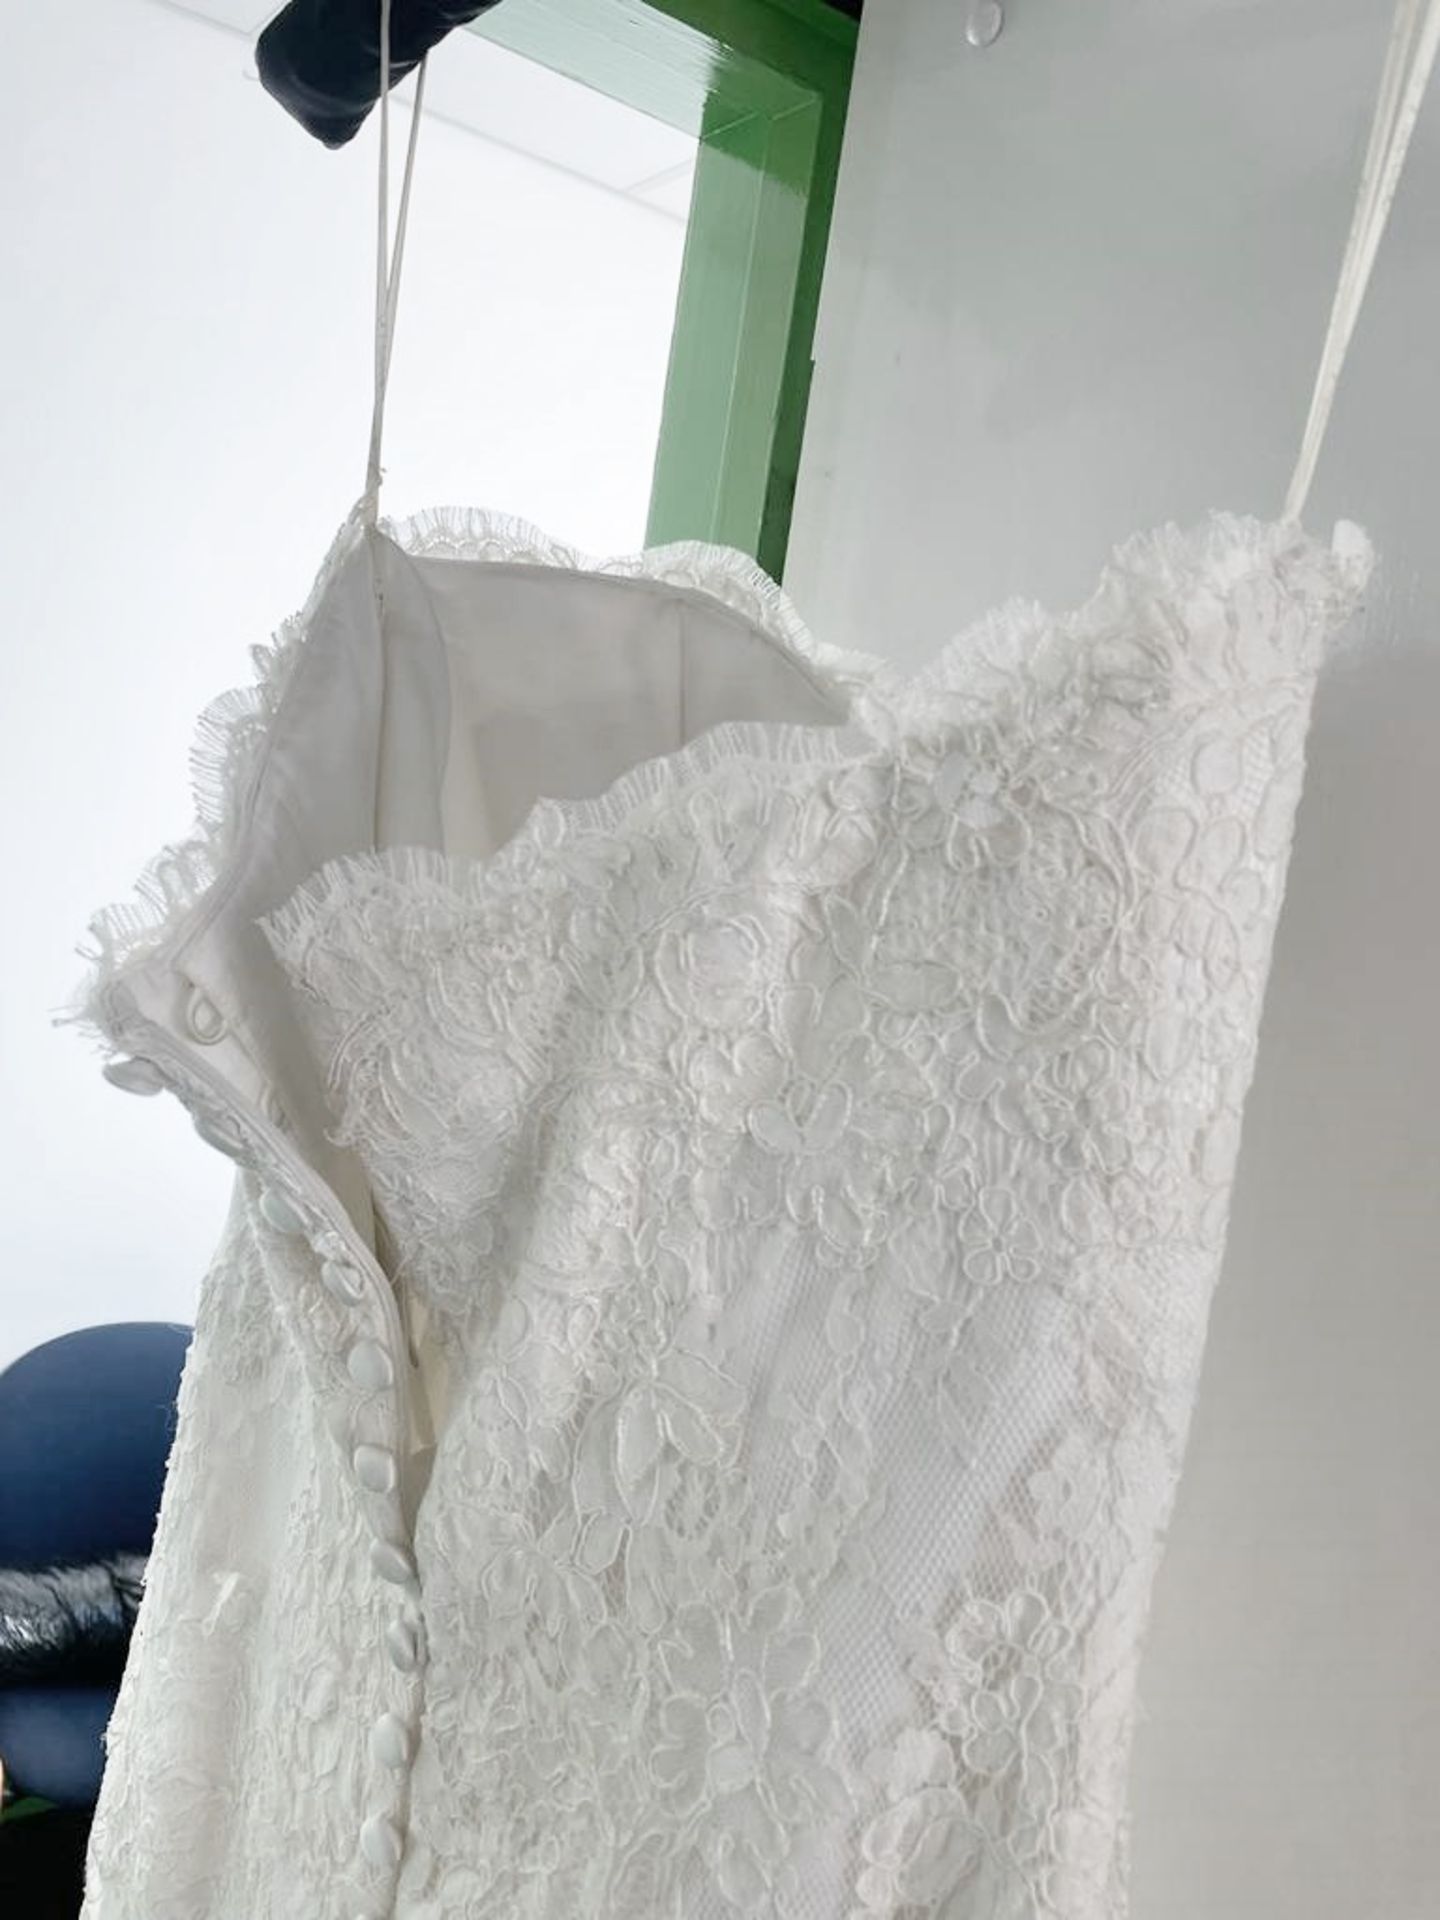 1 x ANNASUL Y 'Zelma' Designer Wedding Dress Bridal Gown - Size: UK 12 - Original RRP £1,750 - Image 6 of 11